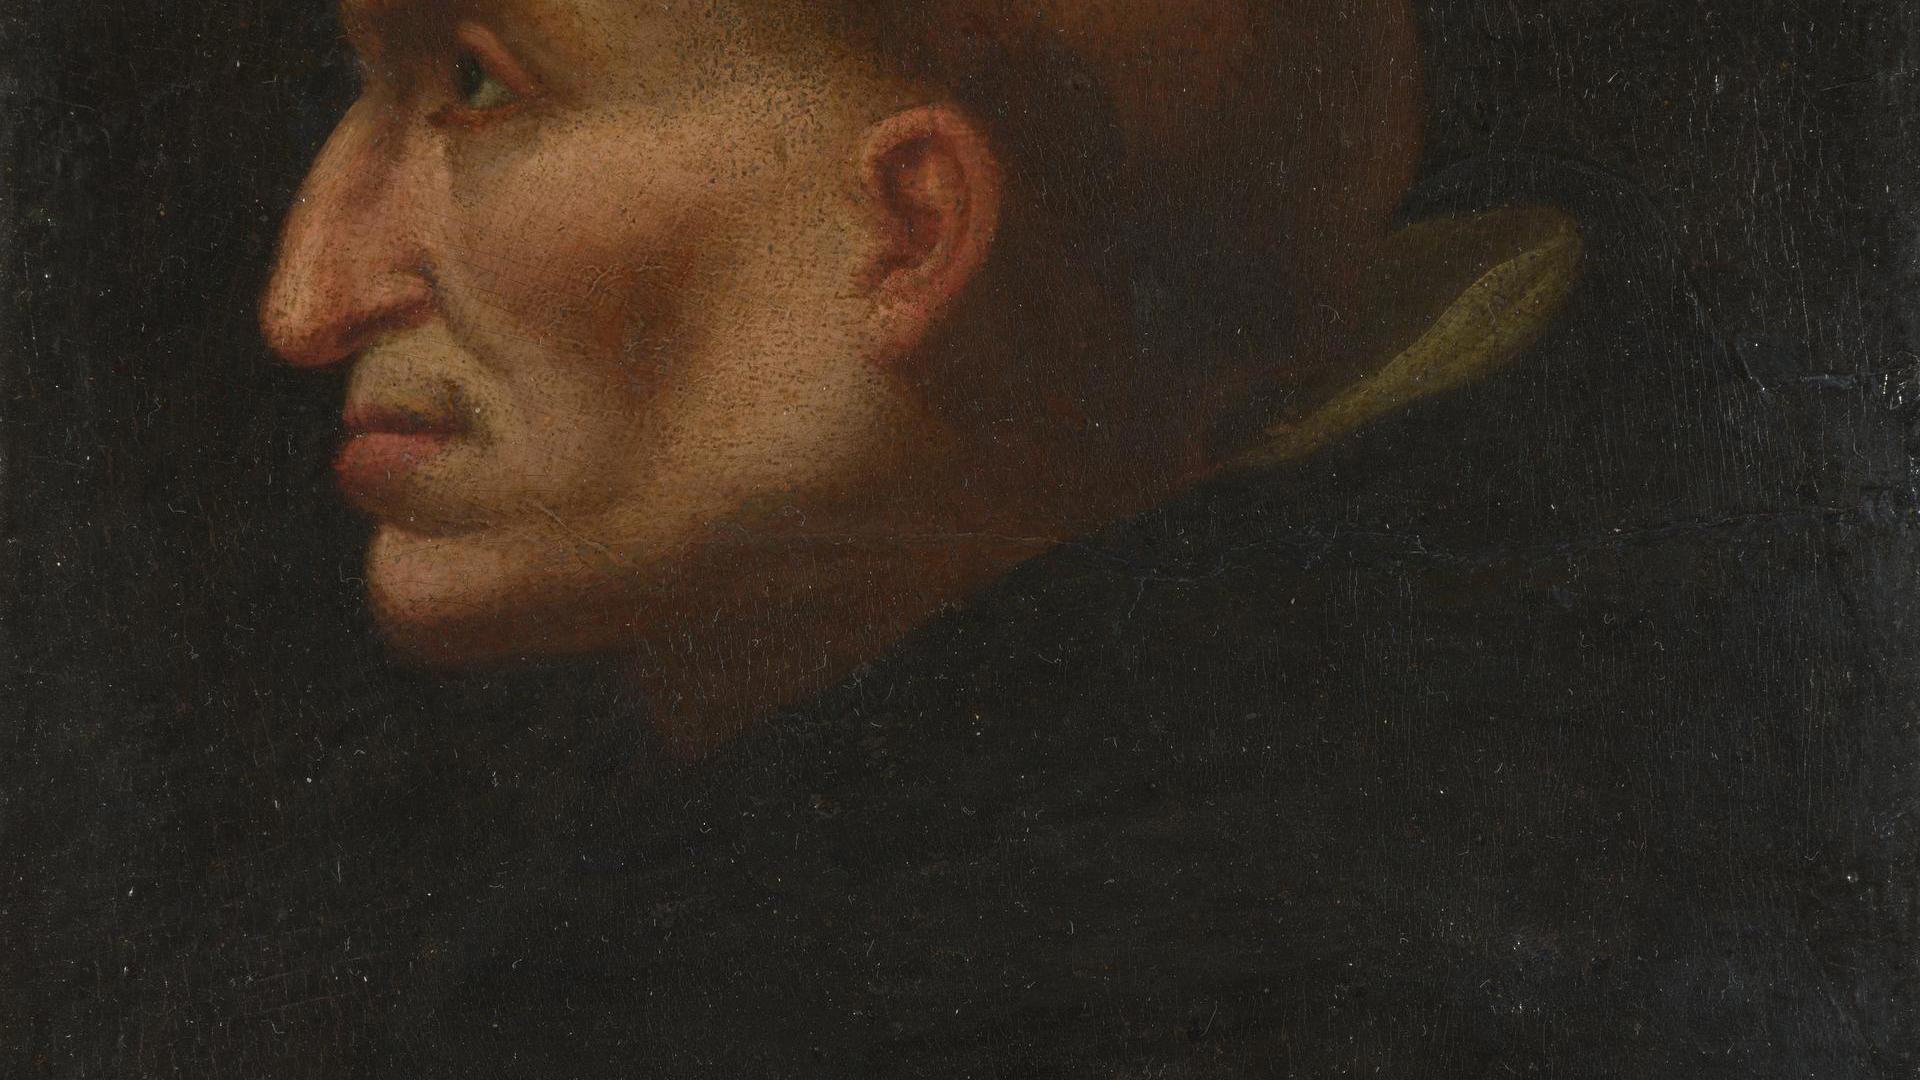 Portrait of Savonarola by Italian, Florentine